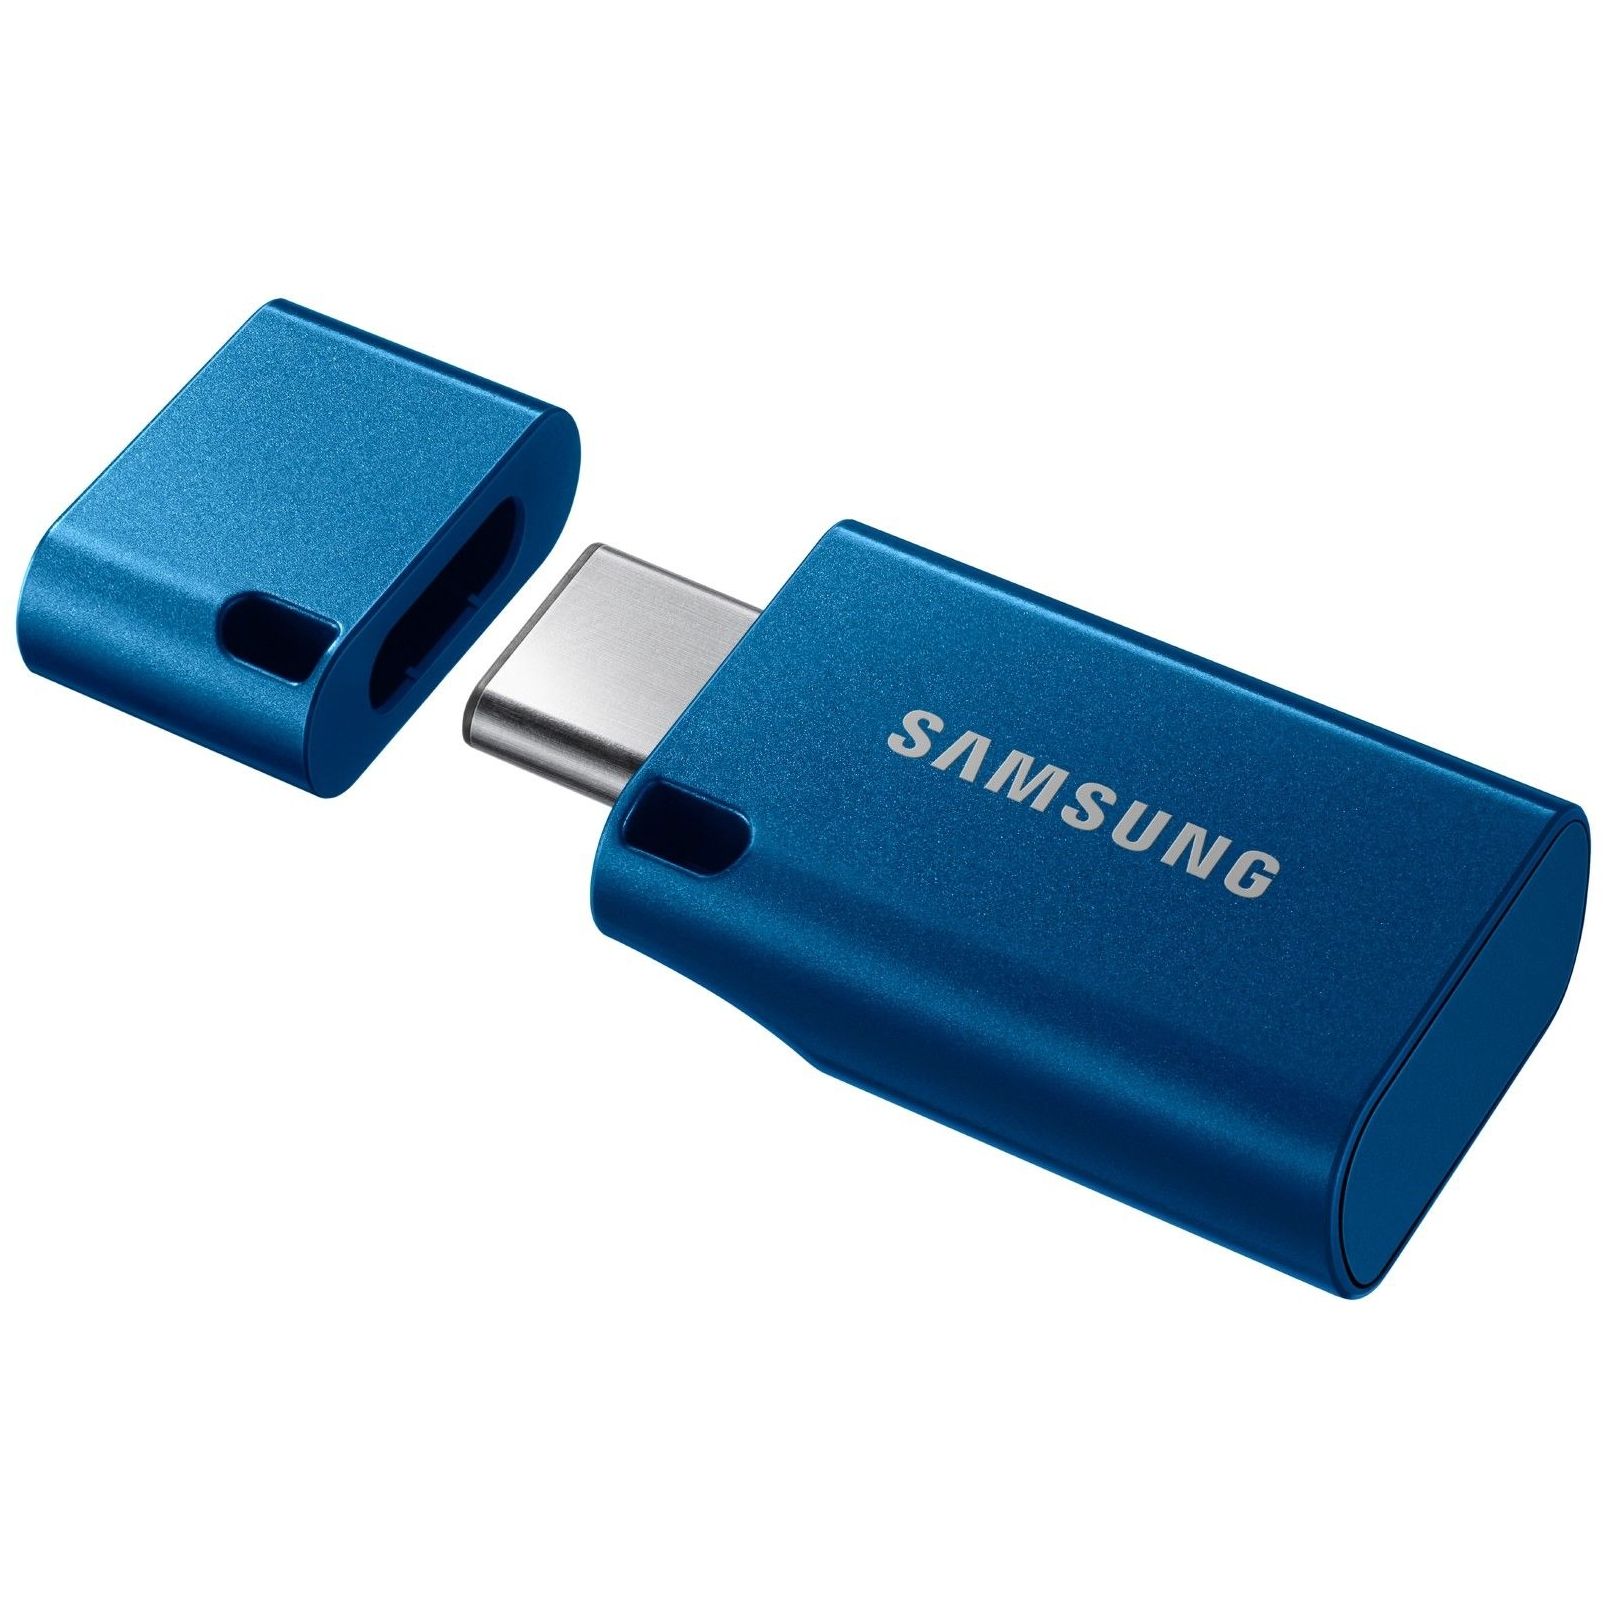 Render of the Samsung USB-C Flash Drive